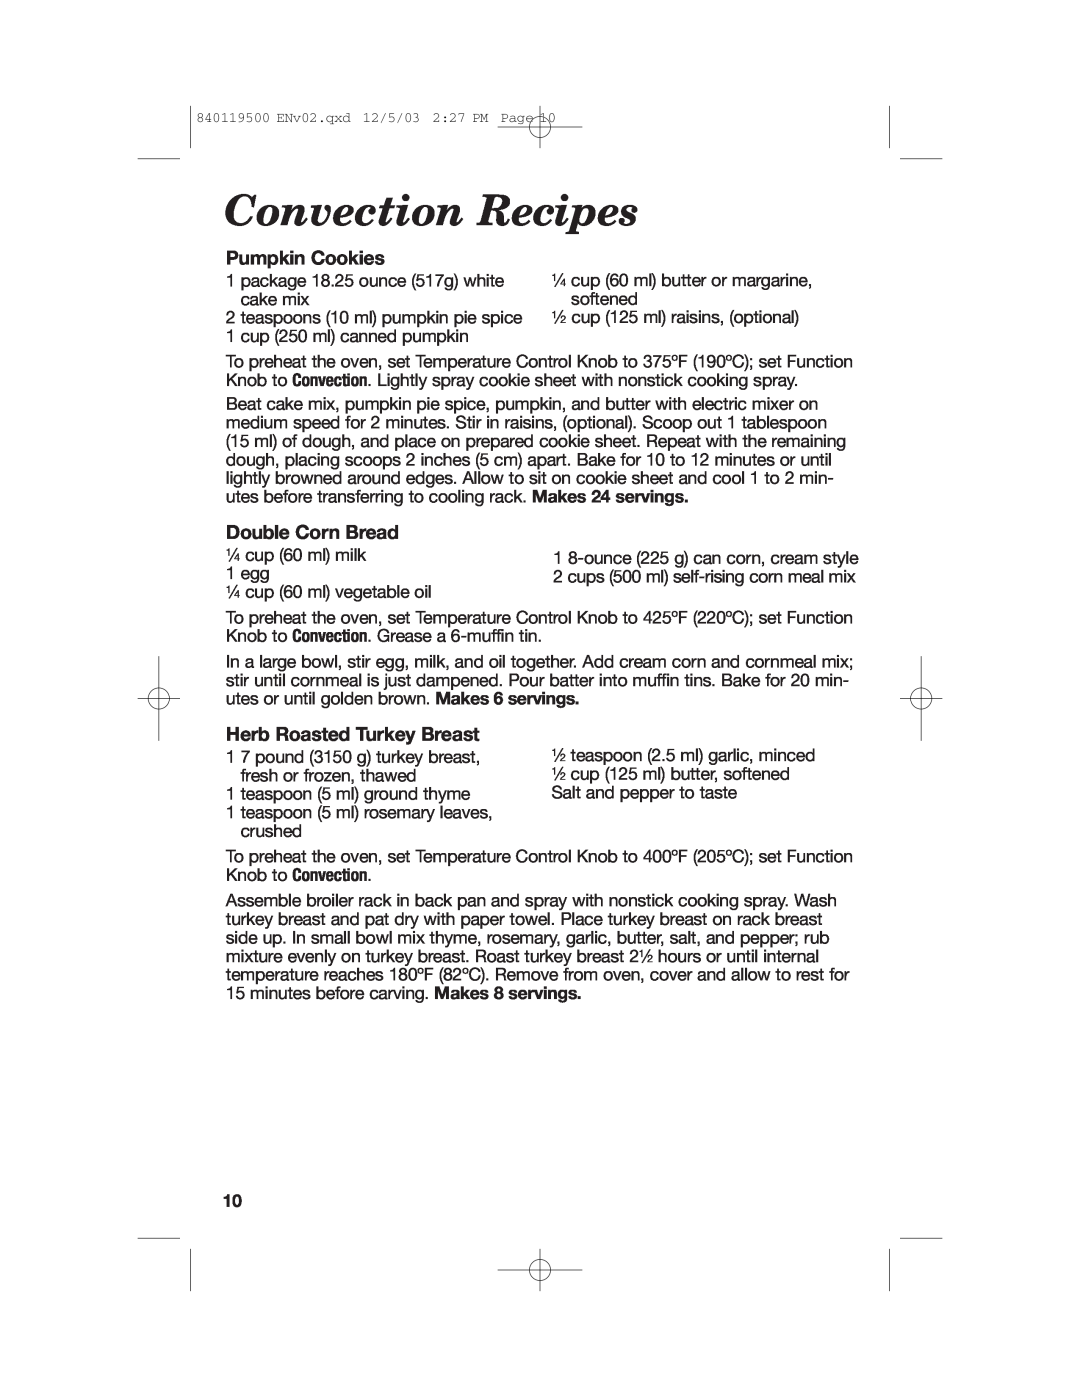 Hamilton Beach 31195 manual Convection Recipes, Pumpkin Cookies, Double Corn Bread, Herb Roasted Turkey Breast 